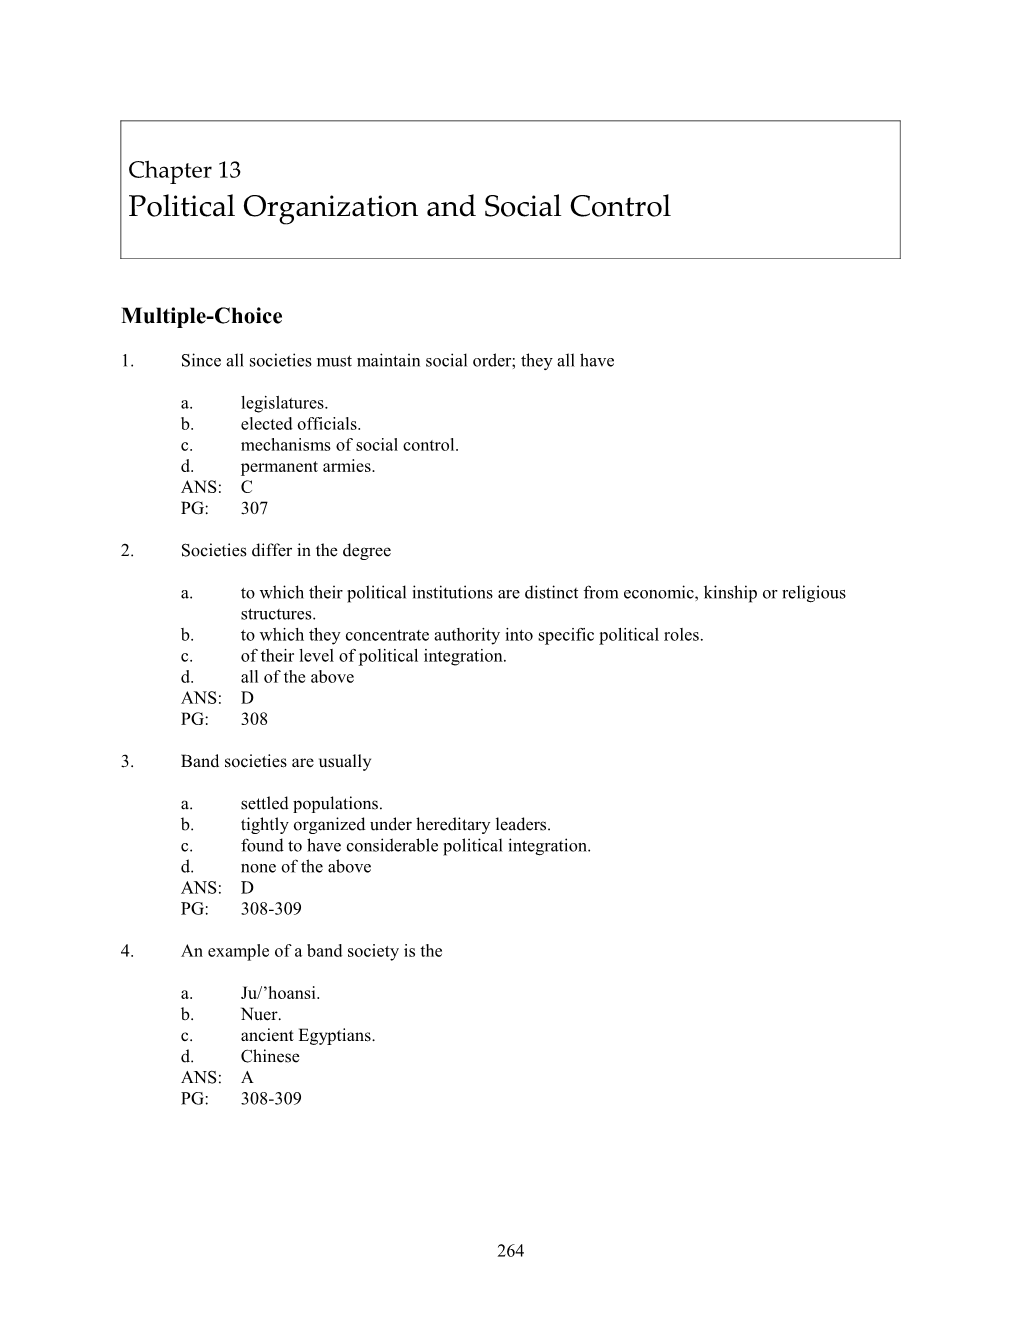 Political Organization and Social Control